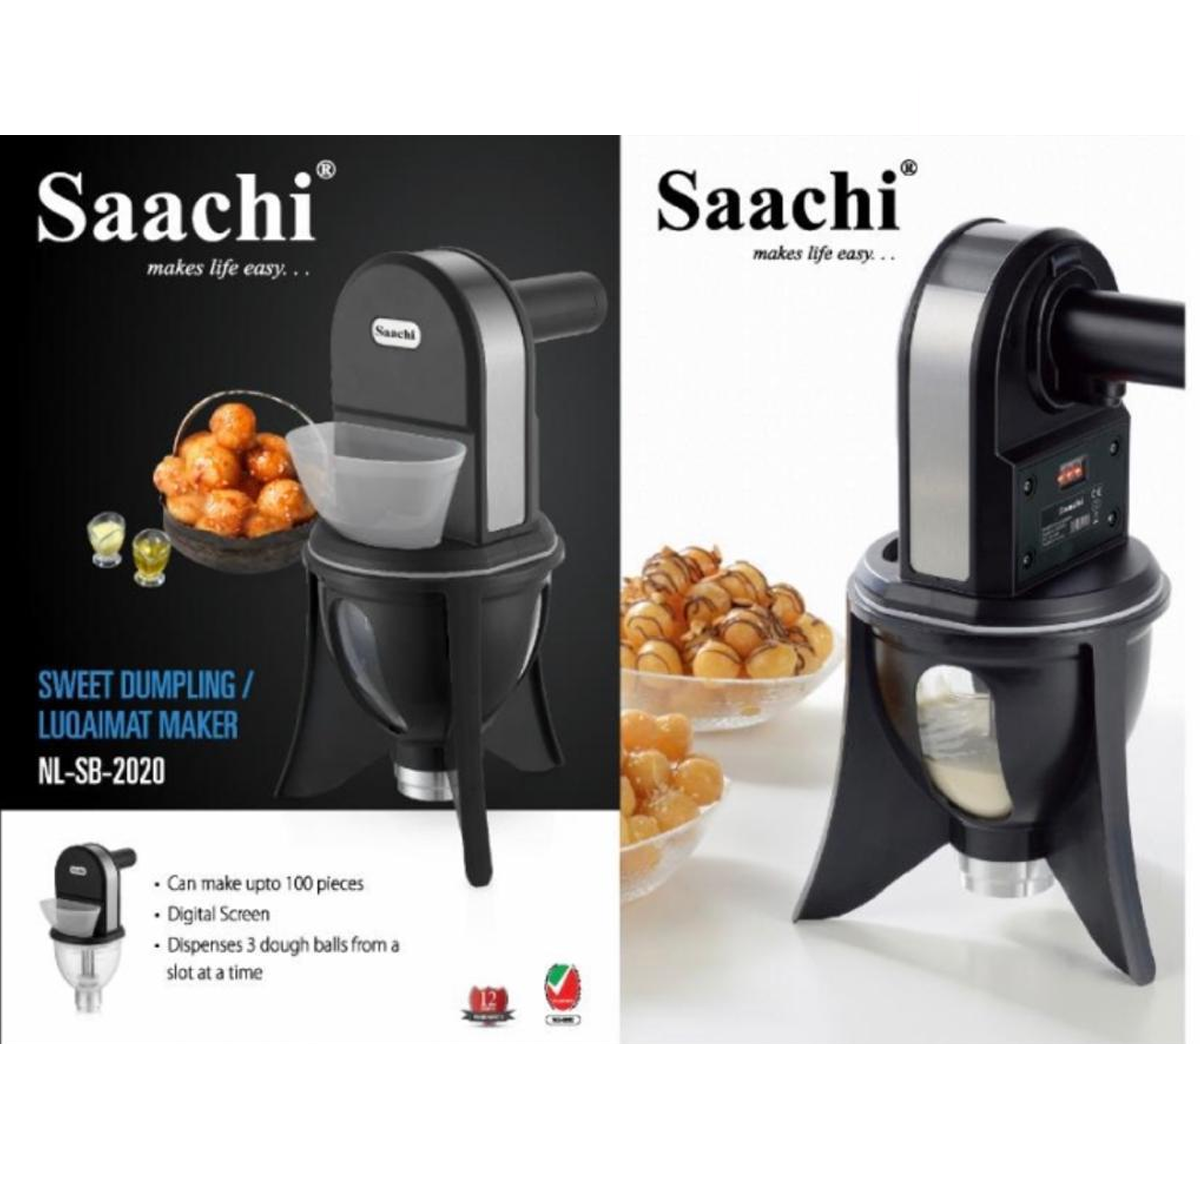 SAACHI Sweet Dumplings/Luqaimat Maker NL-SB-2020-BK